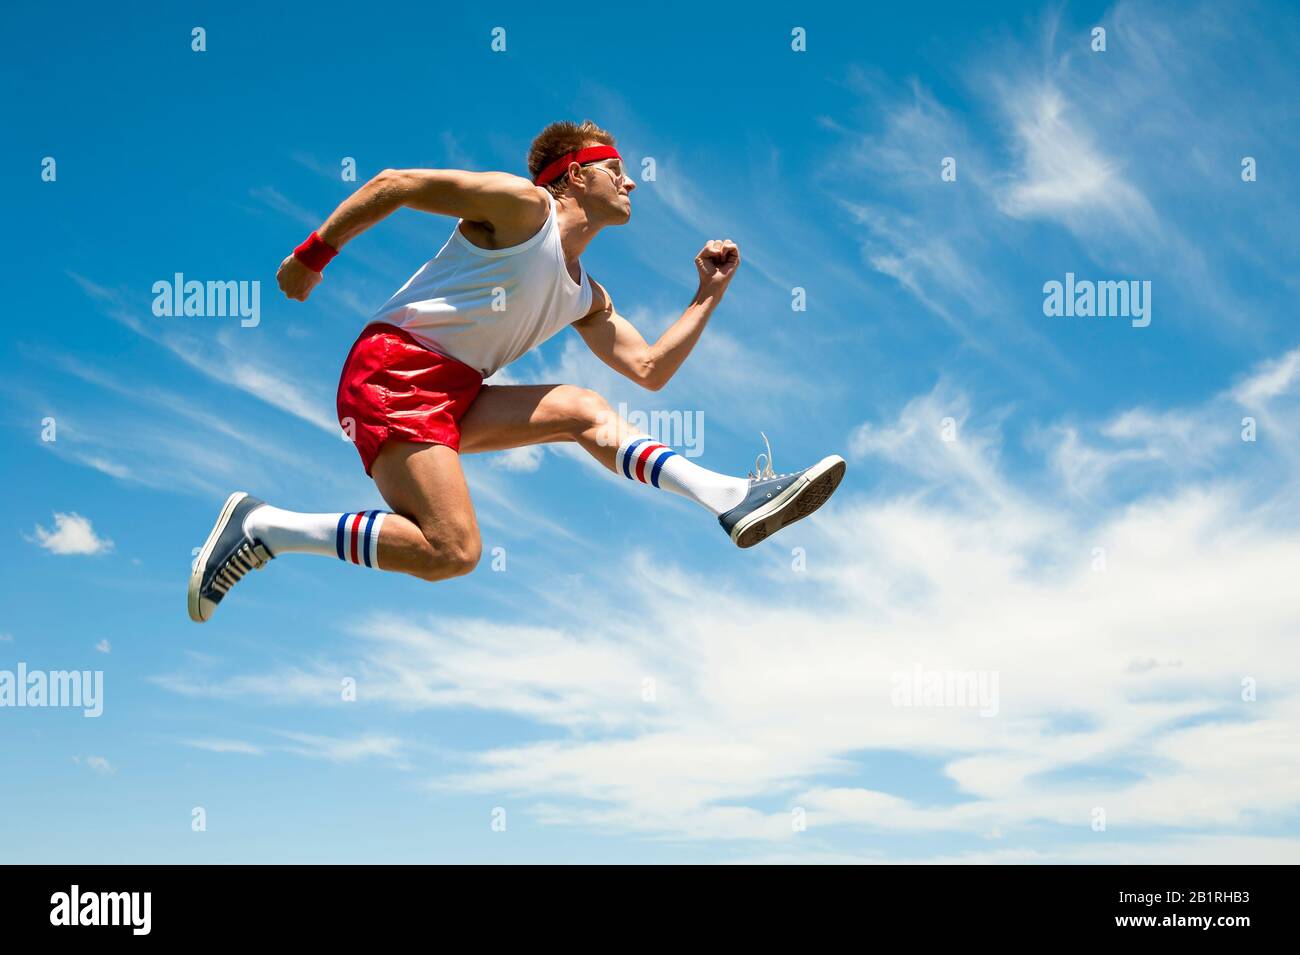 https://c8.alamy.com/comp/2B1RHB3/skinny-nerd-athlete-leaping-in-the-long-jump-wearing-vintage-athletic-wear-against-a-bright-blue-sky-2B1RHB3.jpg